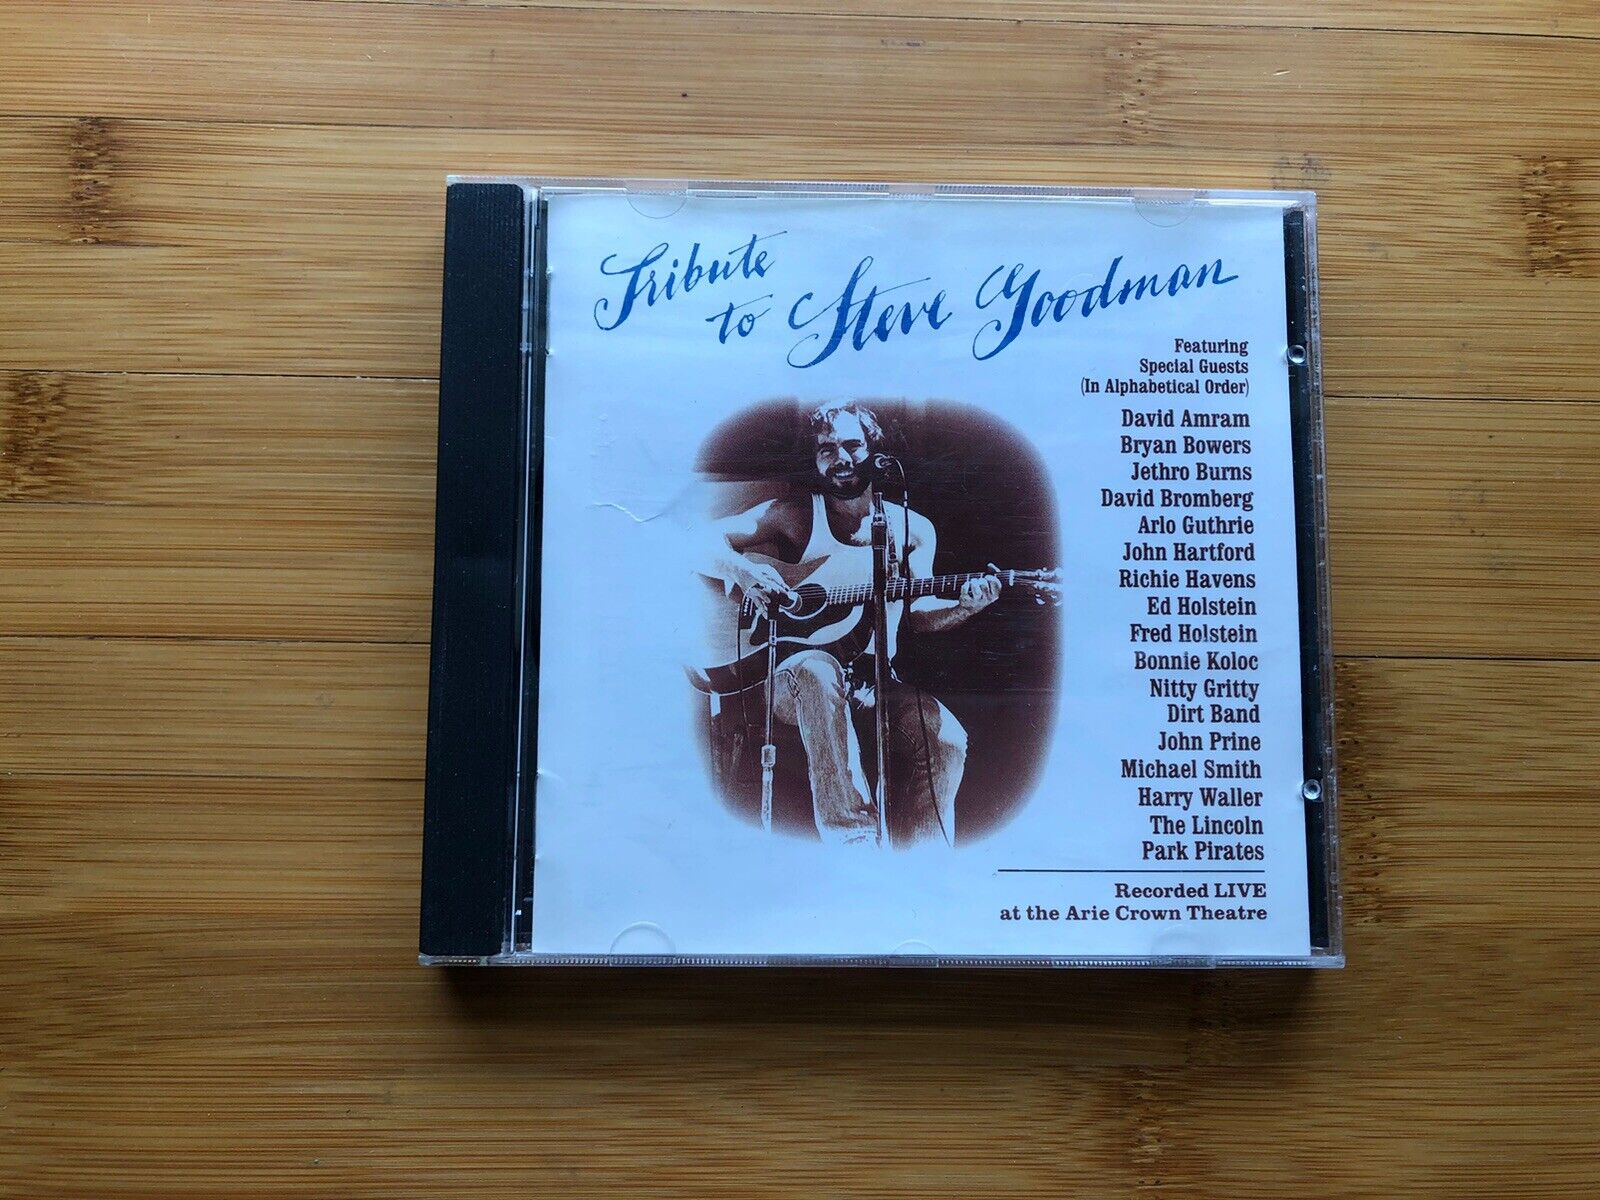 TRIBUTE TO STEVE GOODMAN (CD)  1989  RARE  JOHN PRINE + BONNIE RAITT + MORE